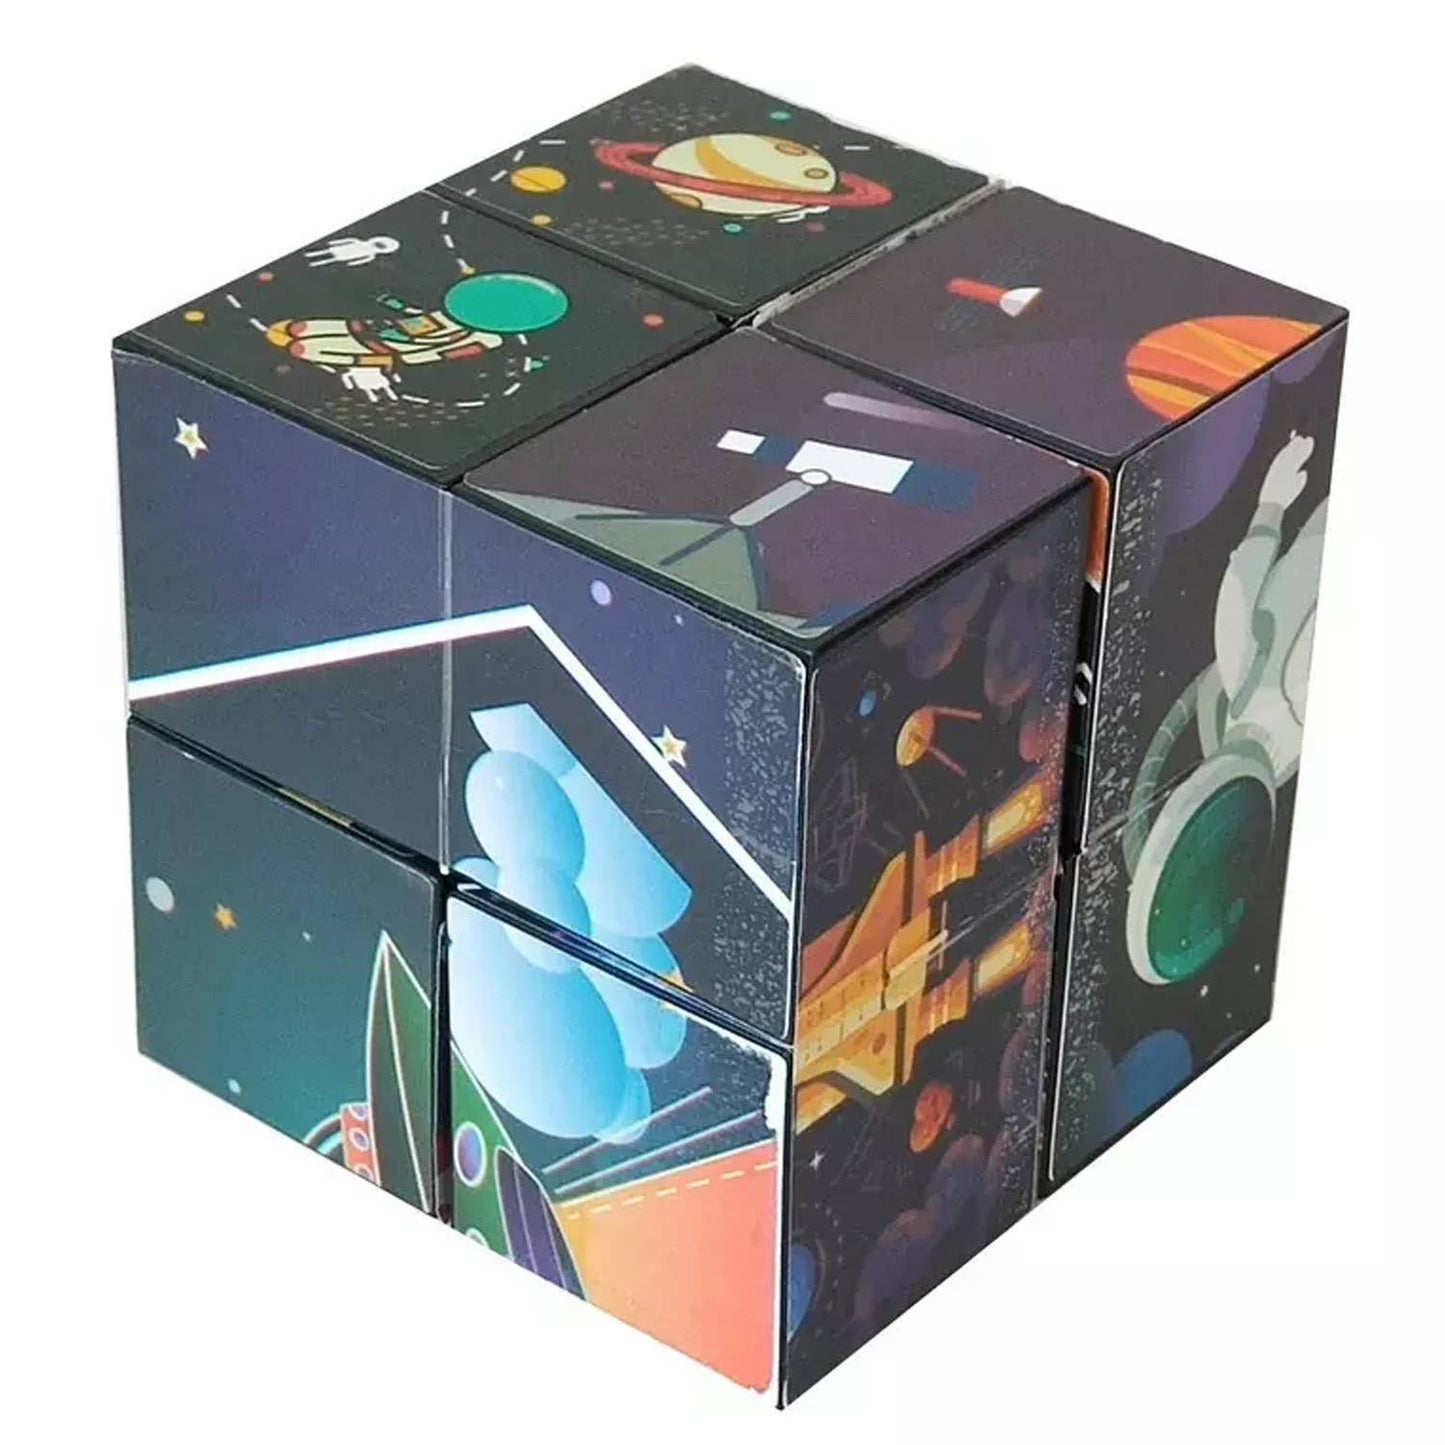 JSBlueRidge Toys - Fidget Space Cubes Toy Galaxy Space Stocking Stuffers Kids Toys